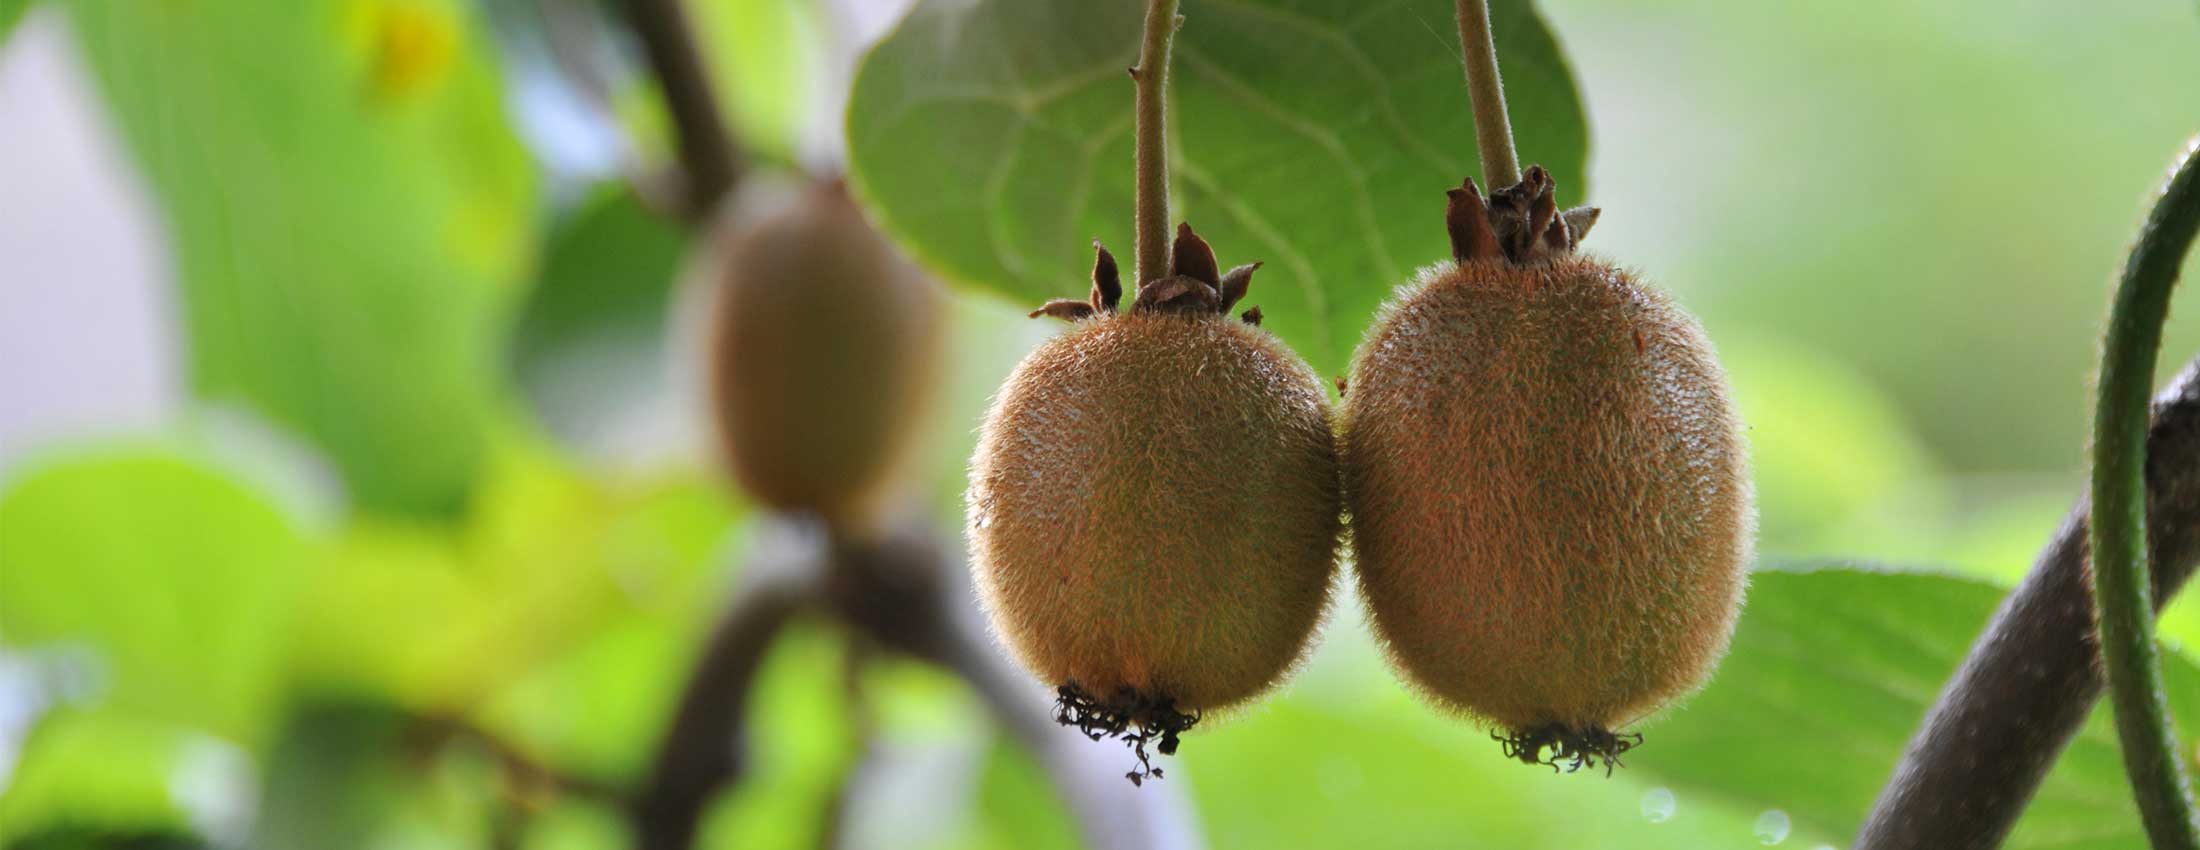 Australian Company Helps with Kiwifruit Crisis